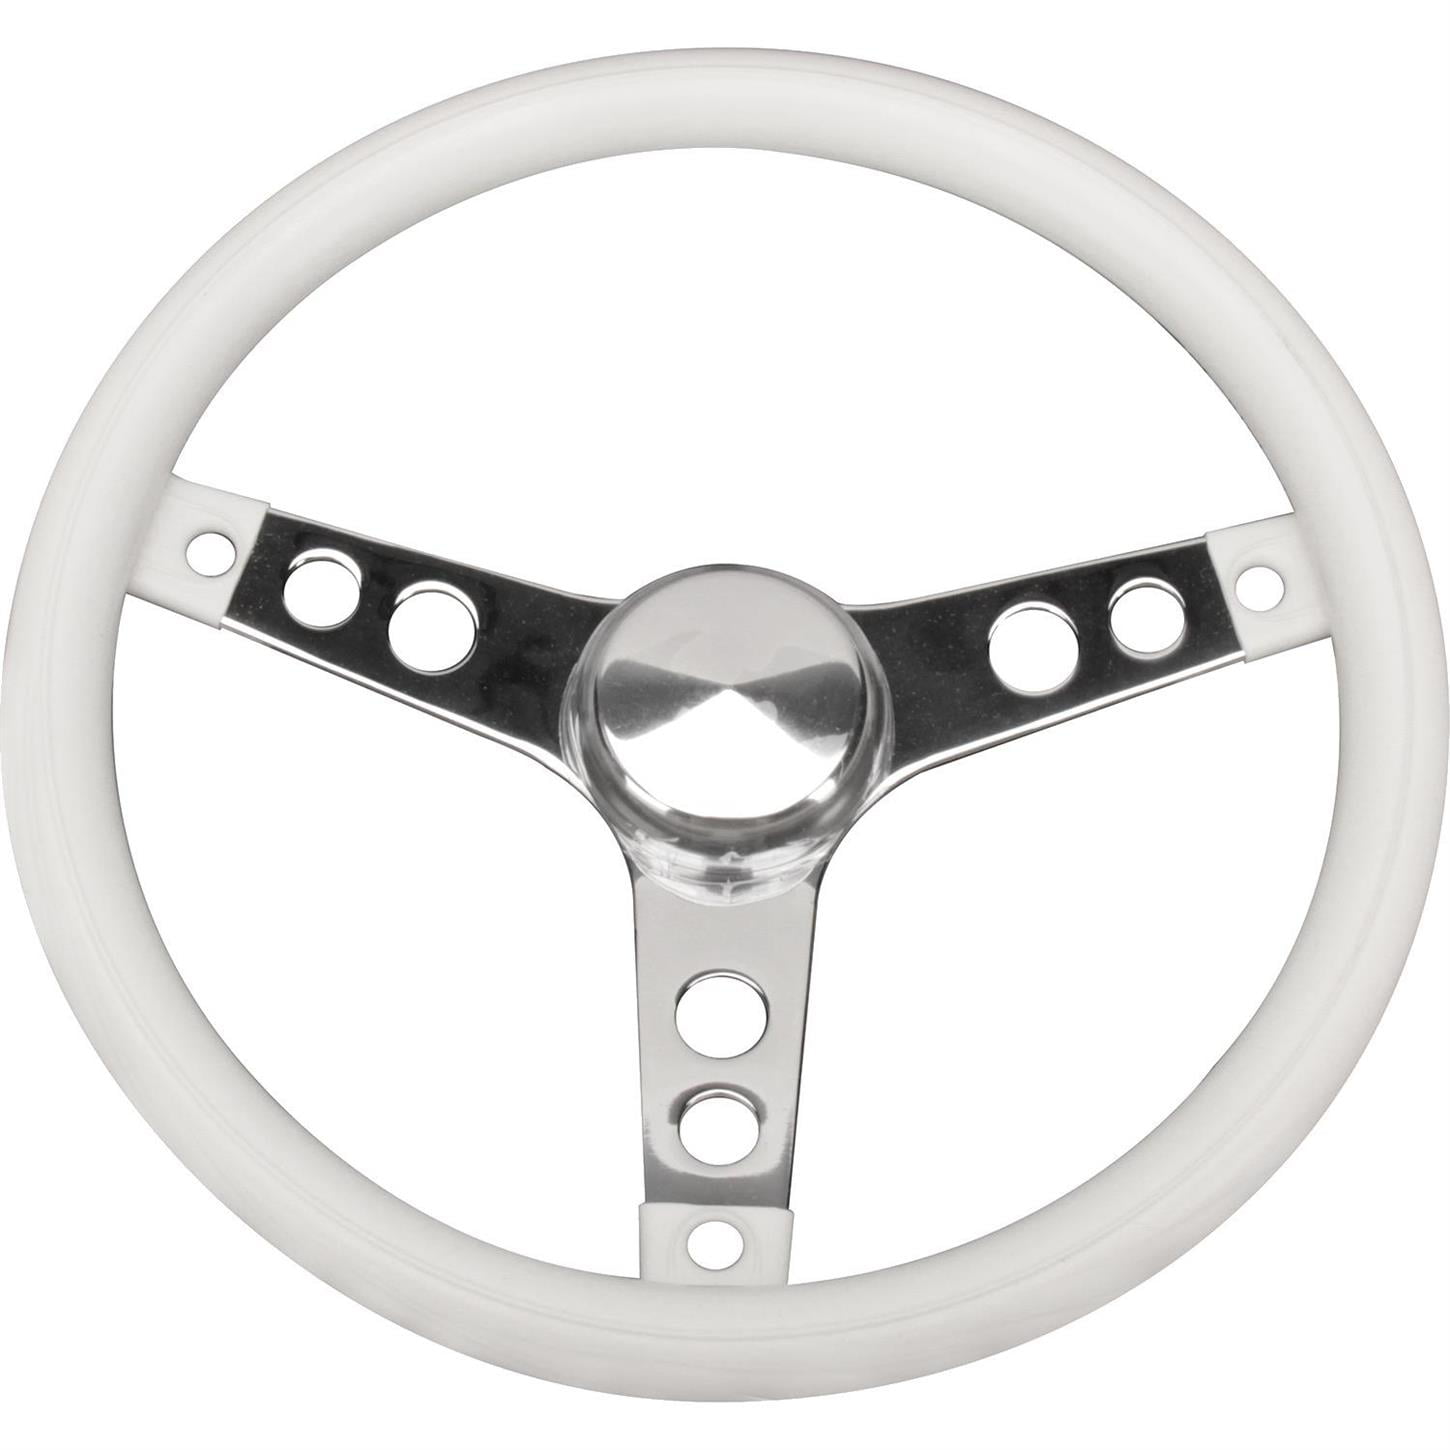 Grant 831 Classic Steering Wheel